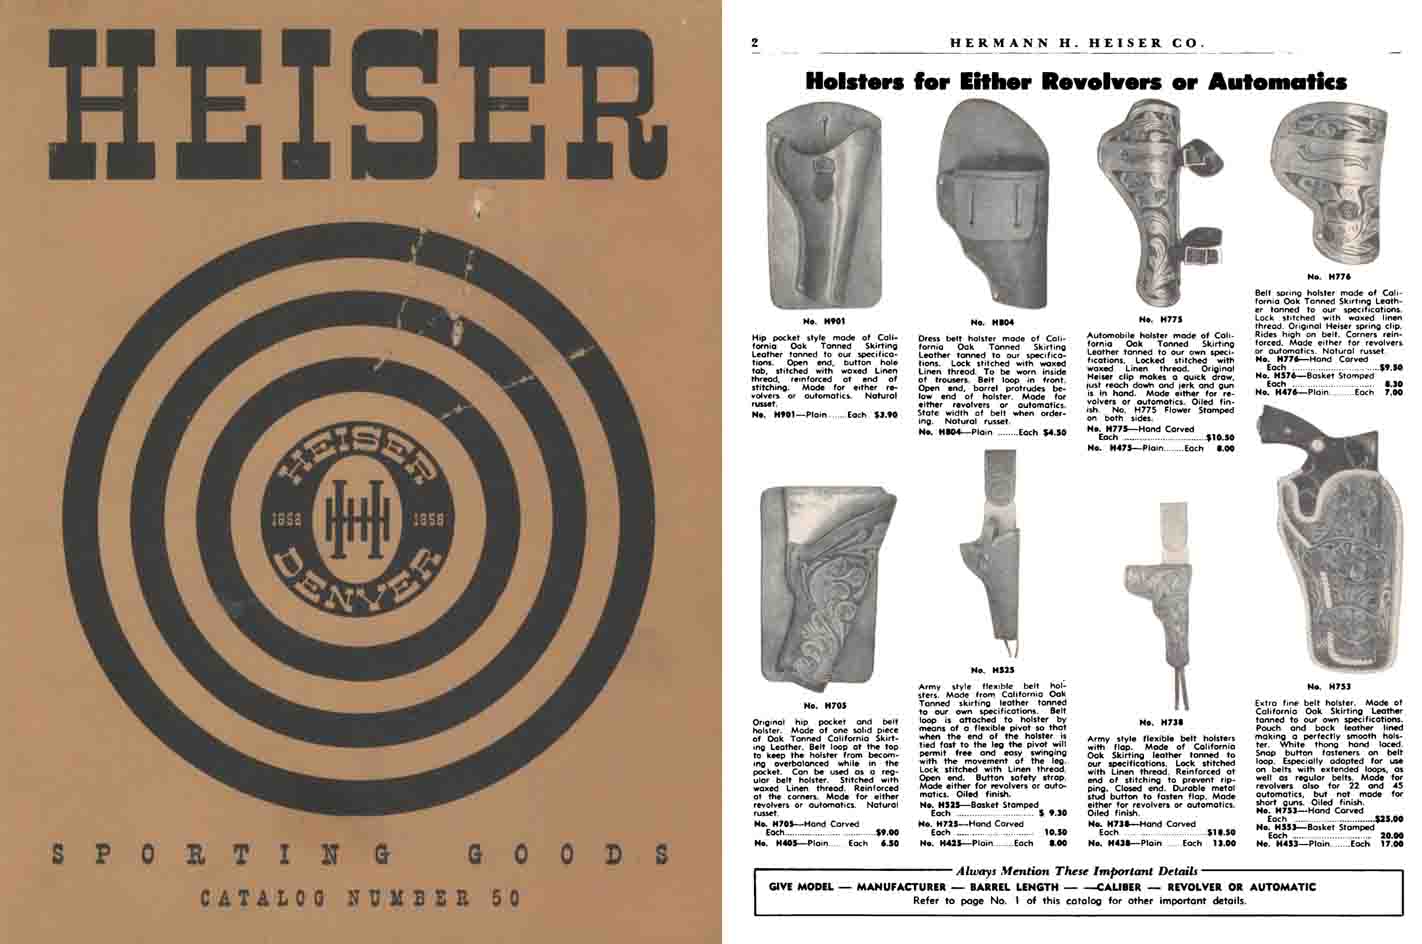 Heiser Gun Holsters and Sporting Goods Catalog #50 (Colorado) - GB-img-0